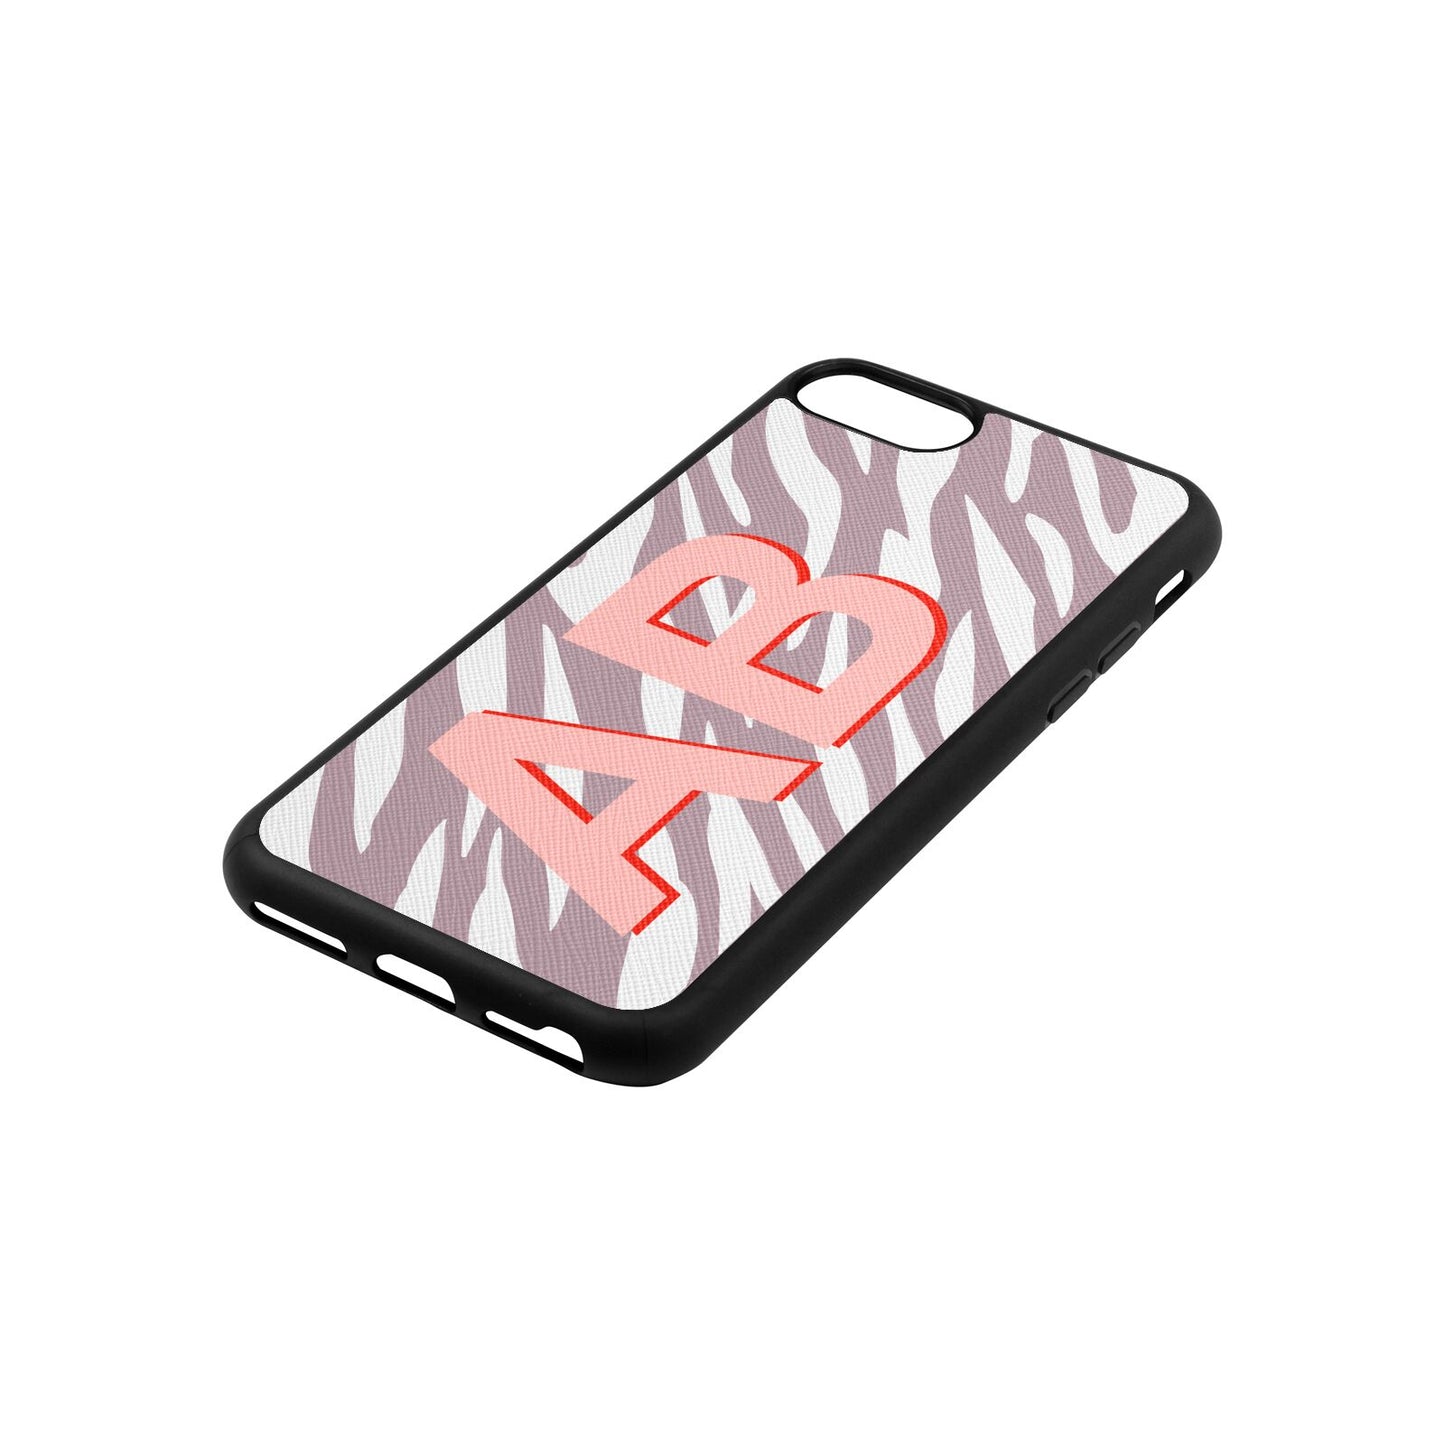 Zebra Initials Lotus Saffiano Leather iPhone 8 Case Side Angle